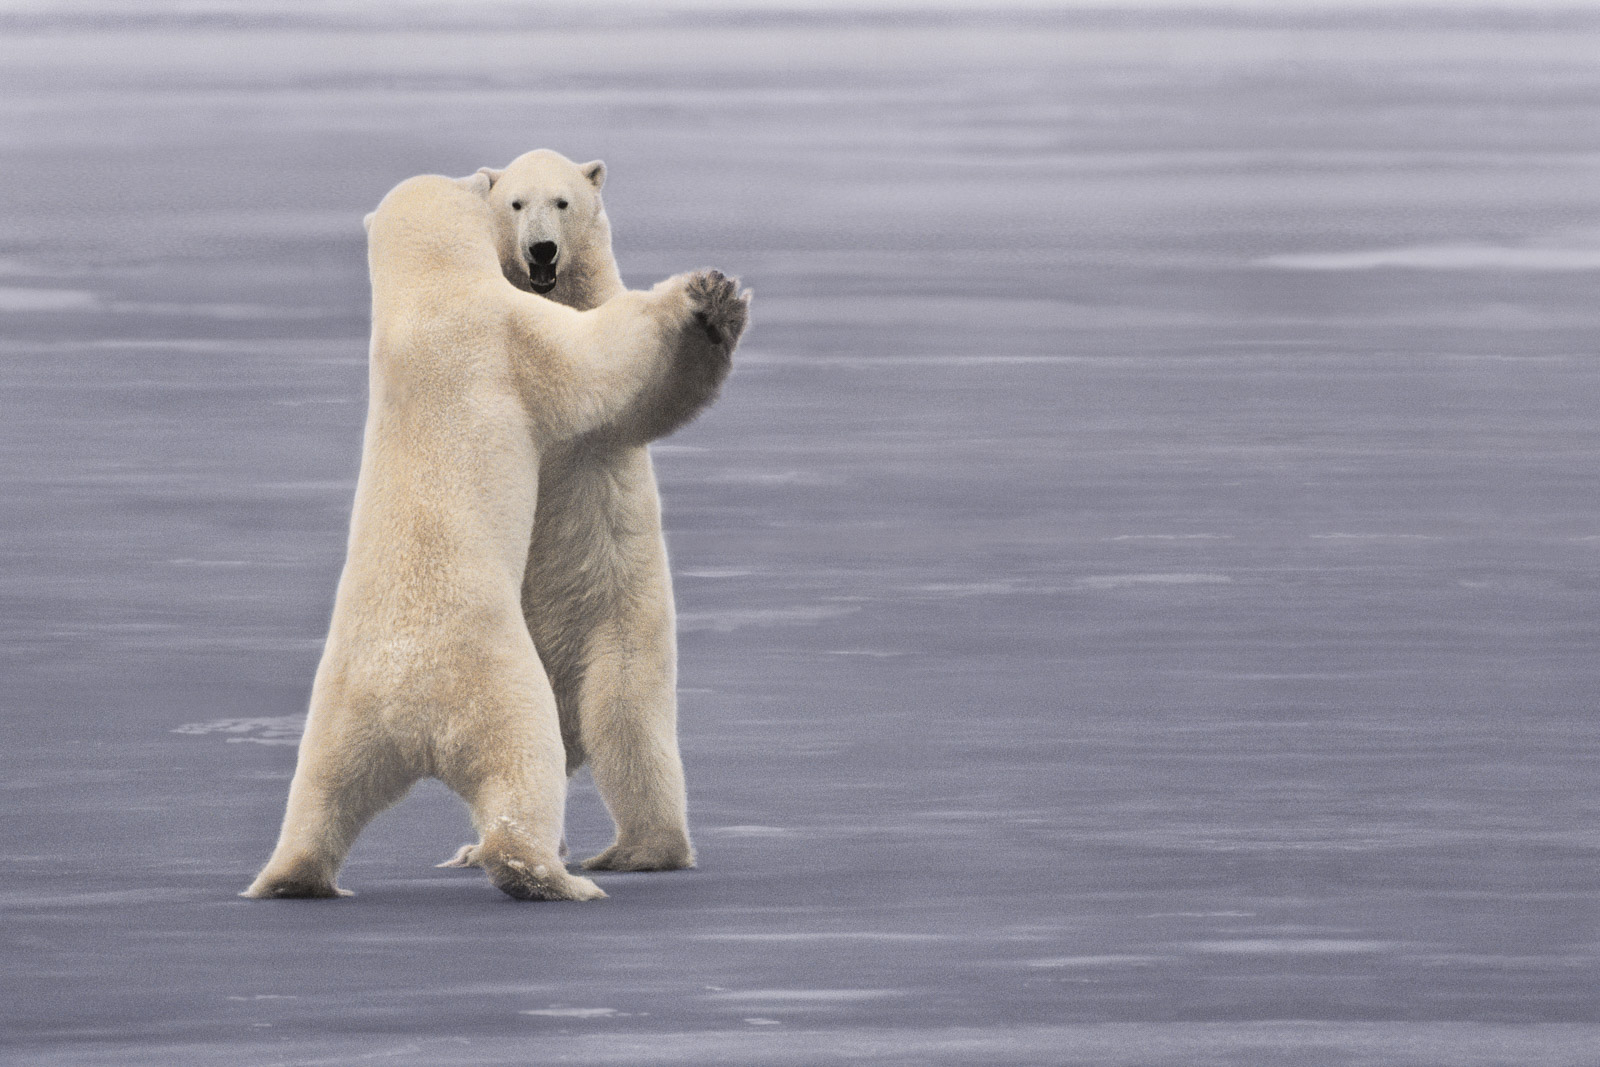 Polar bears sparring, Hudson Bay, Canada